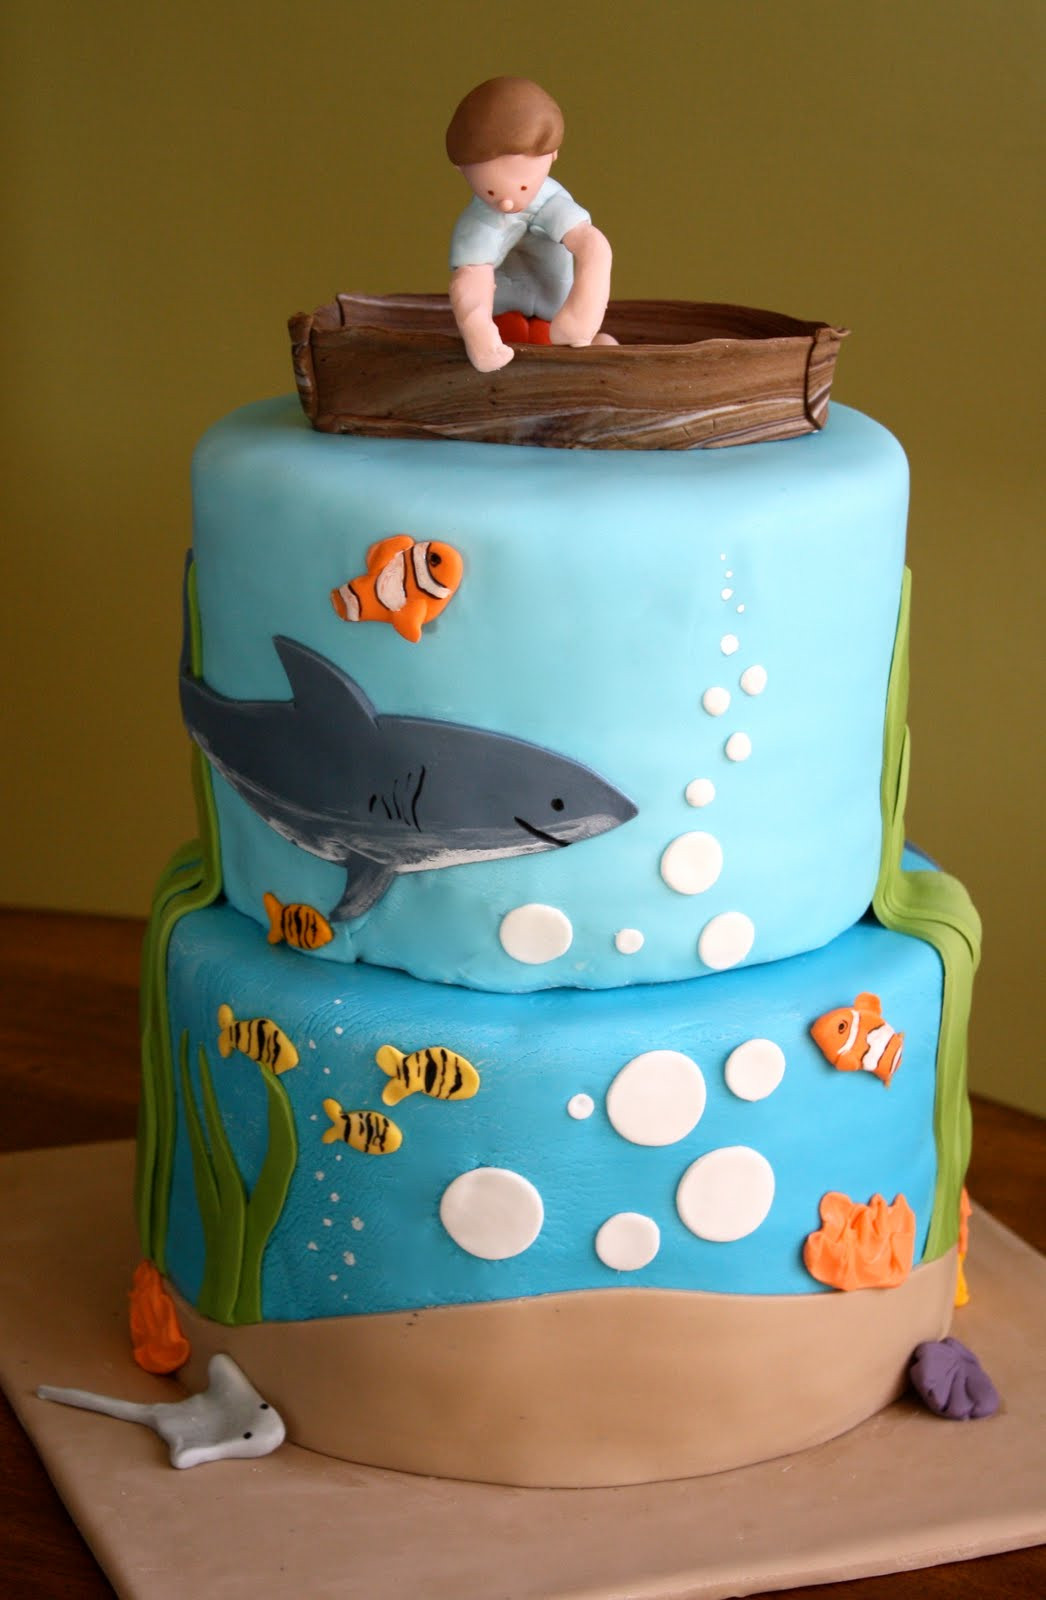 Boys Birthday Cake Ideas
 Baker s Cakes Under the Sea Birthday Cake